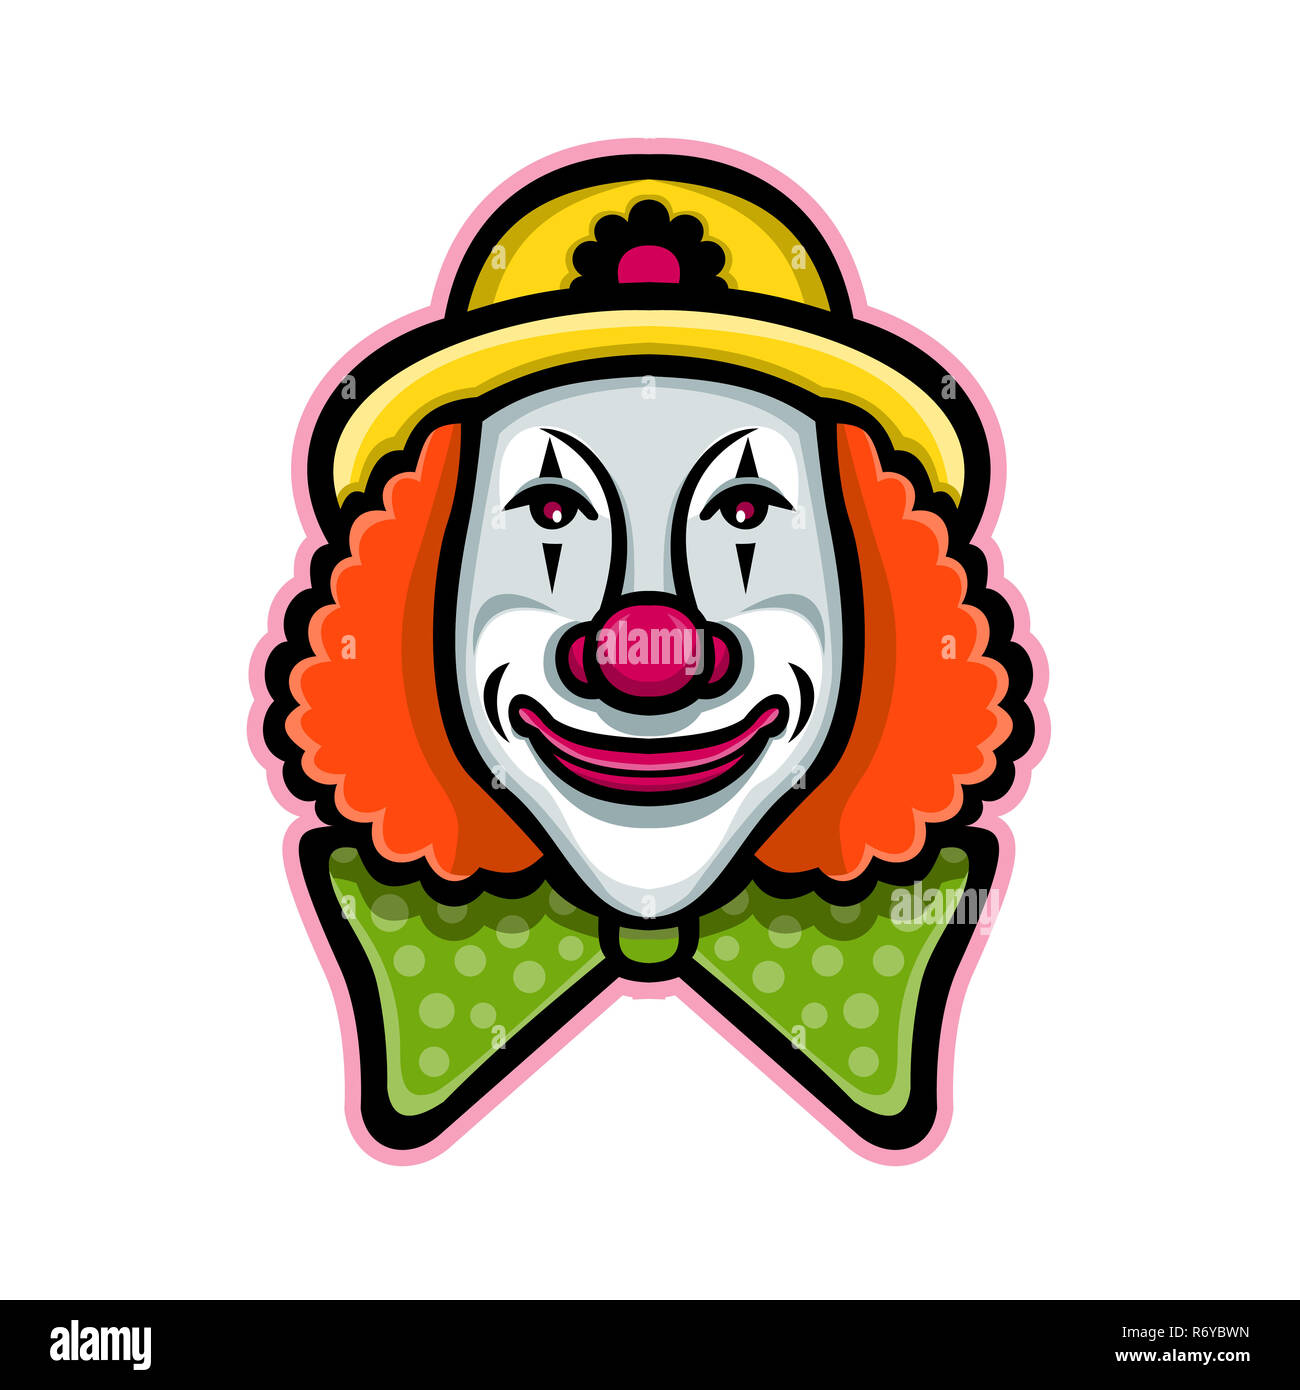 Circus Clown Mascot Stock Photo